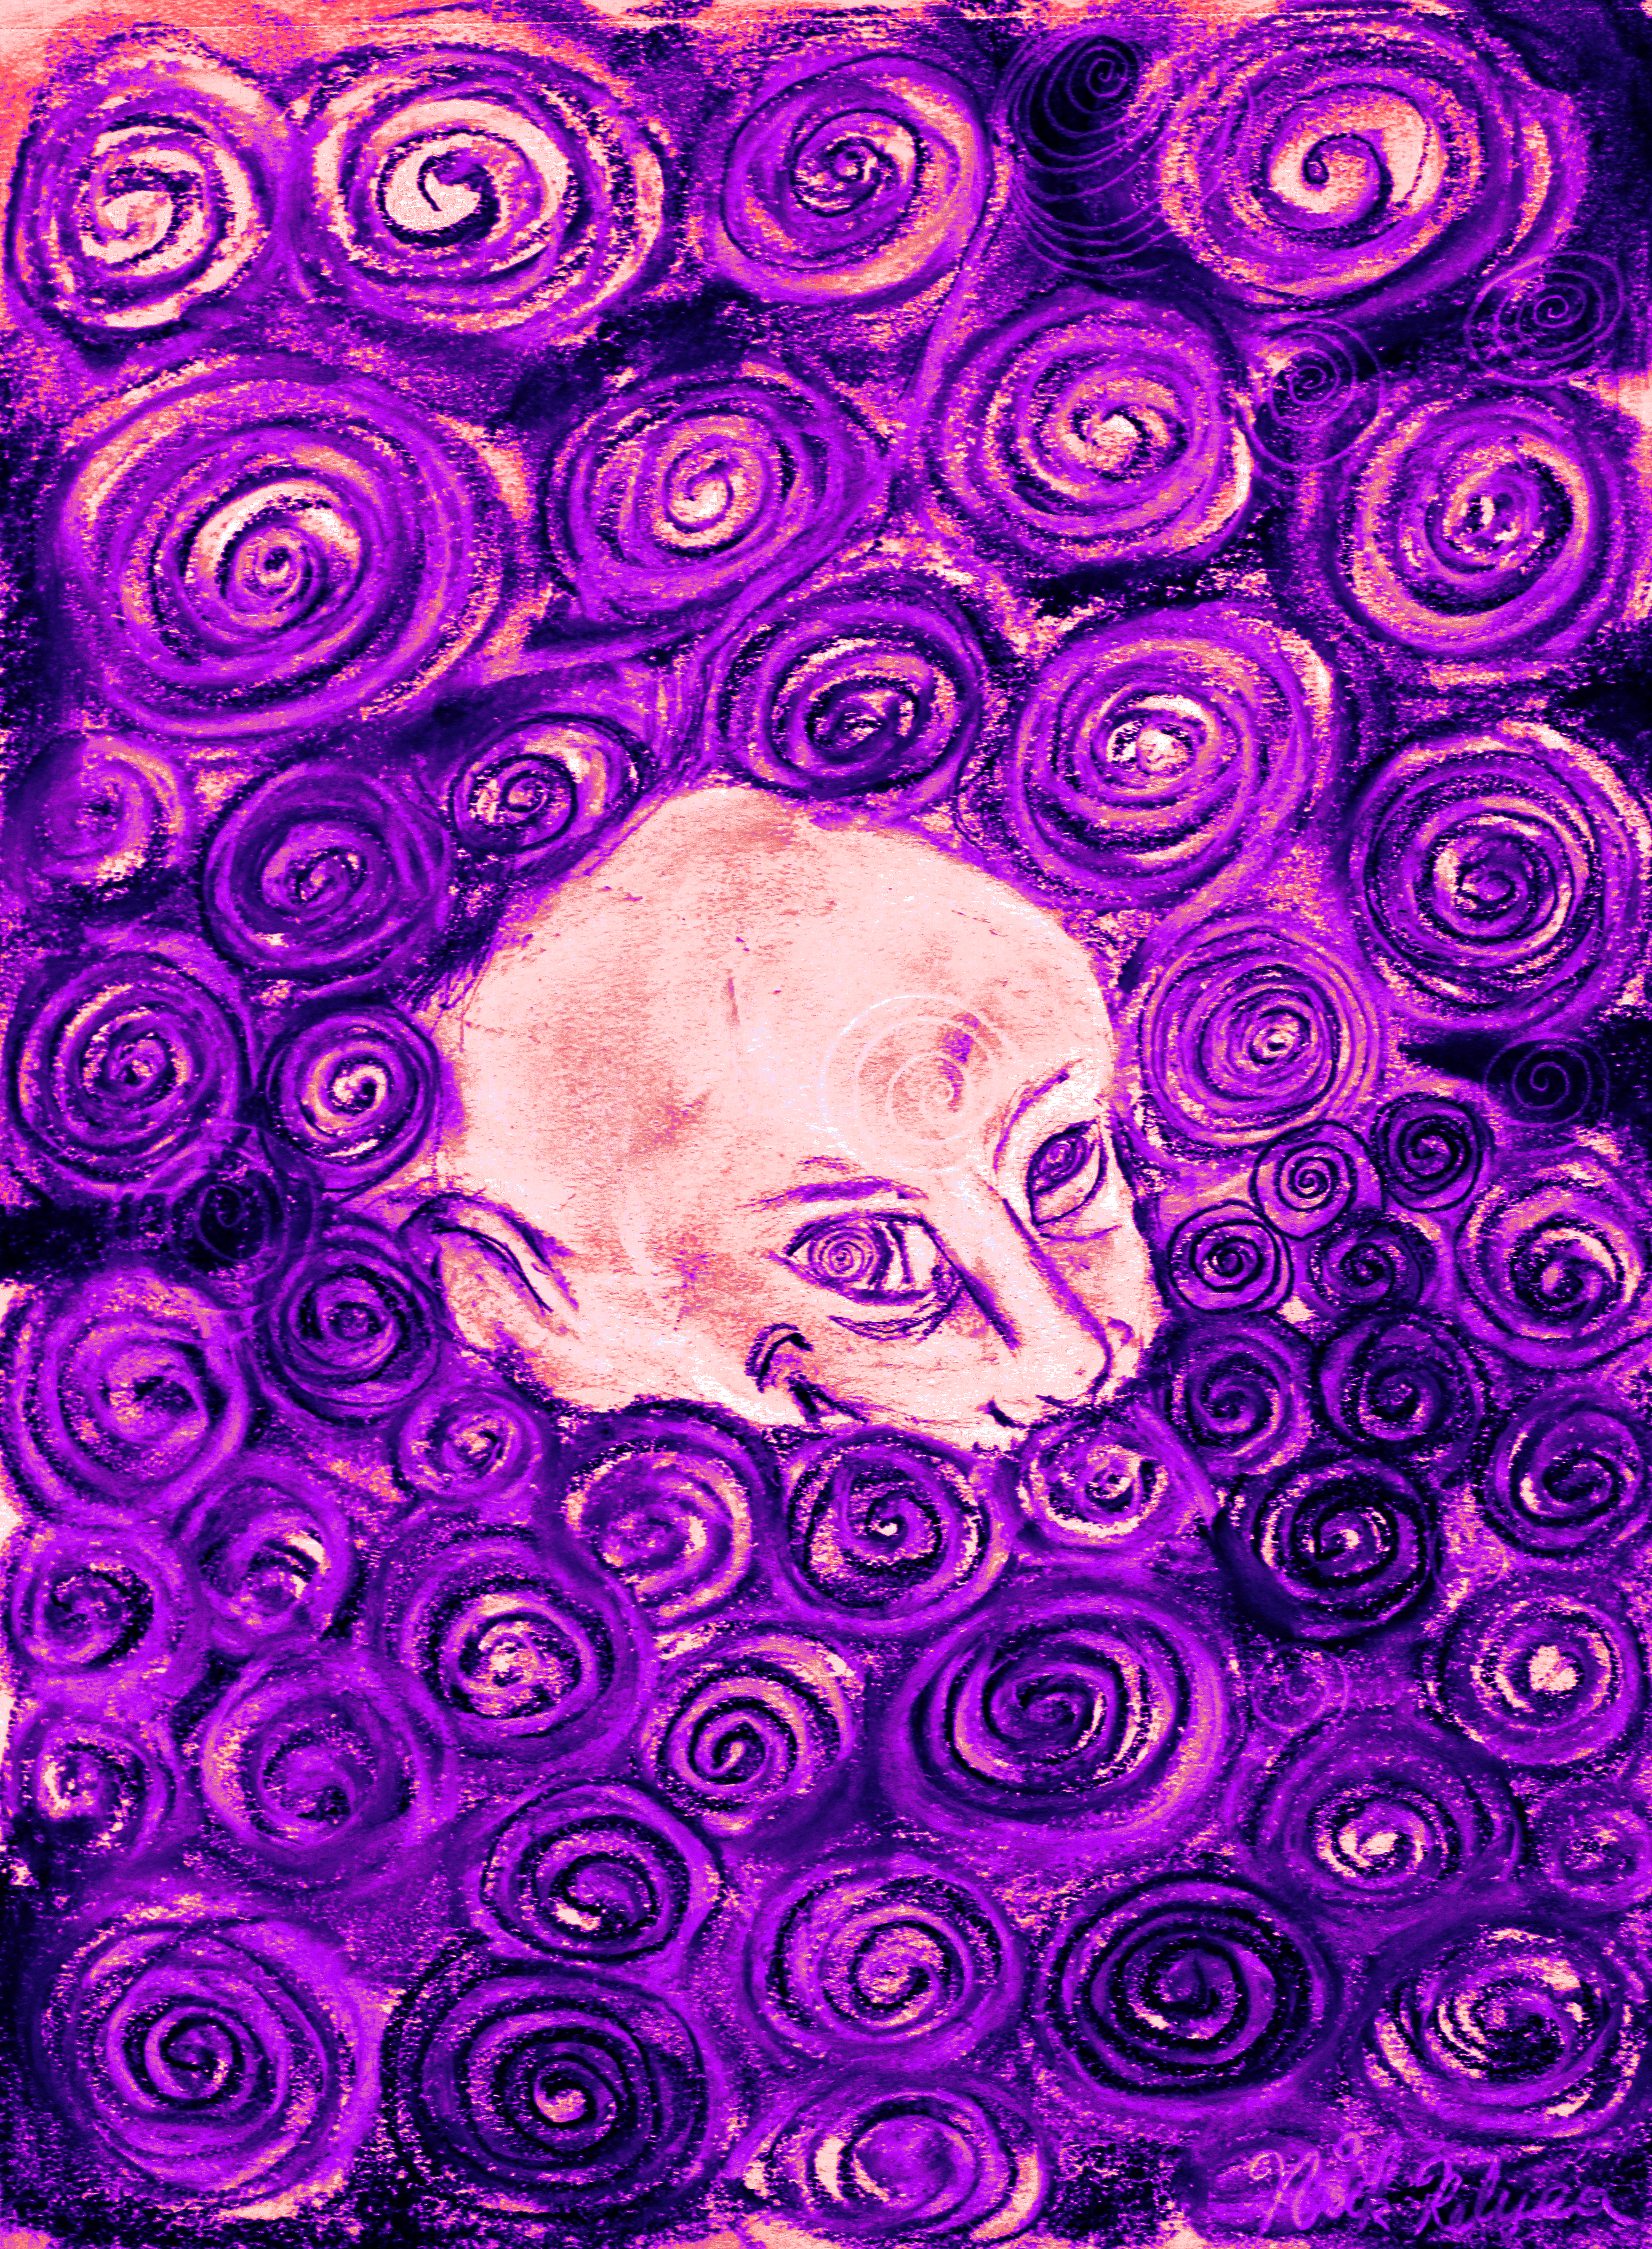 Buried in flowers purple